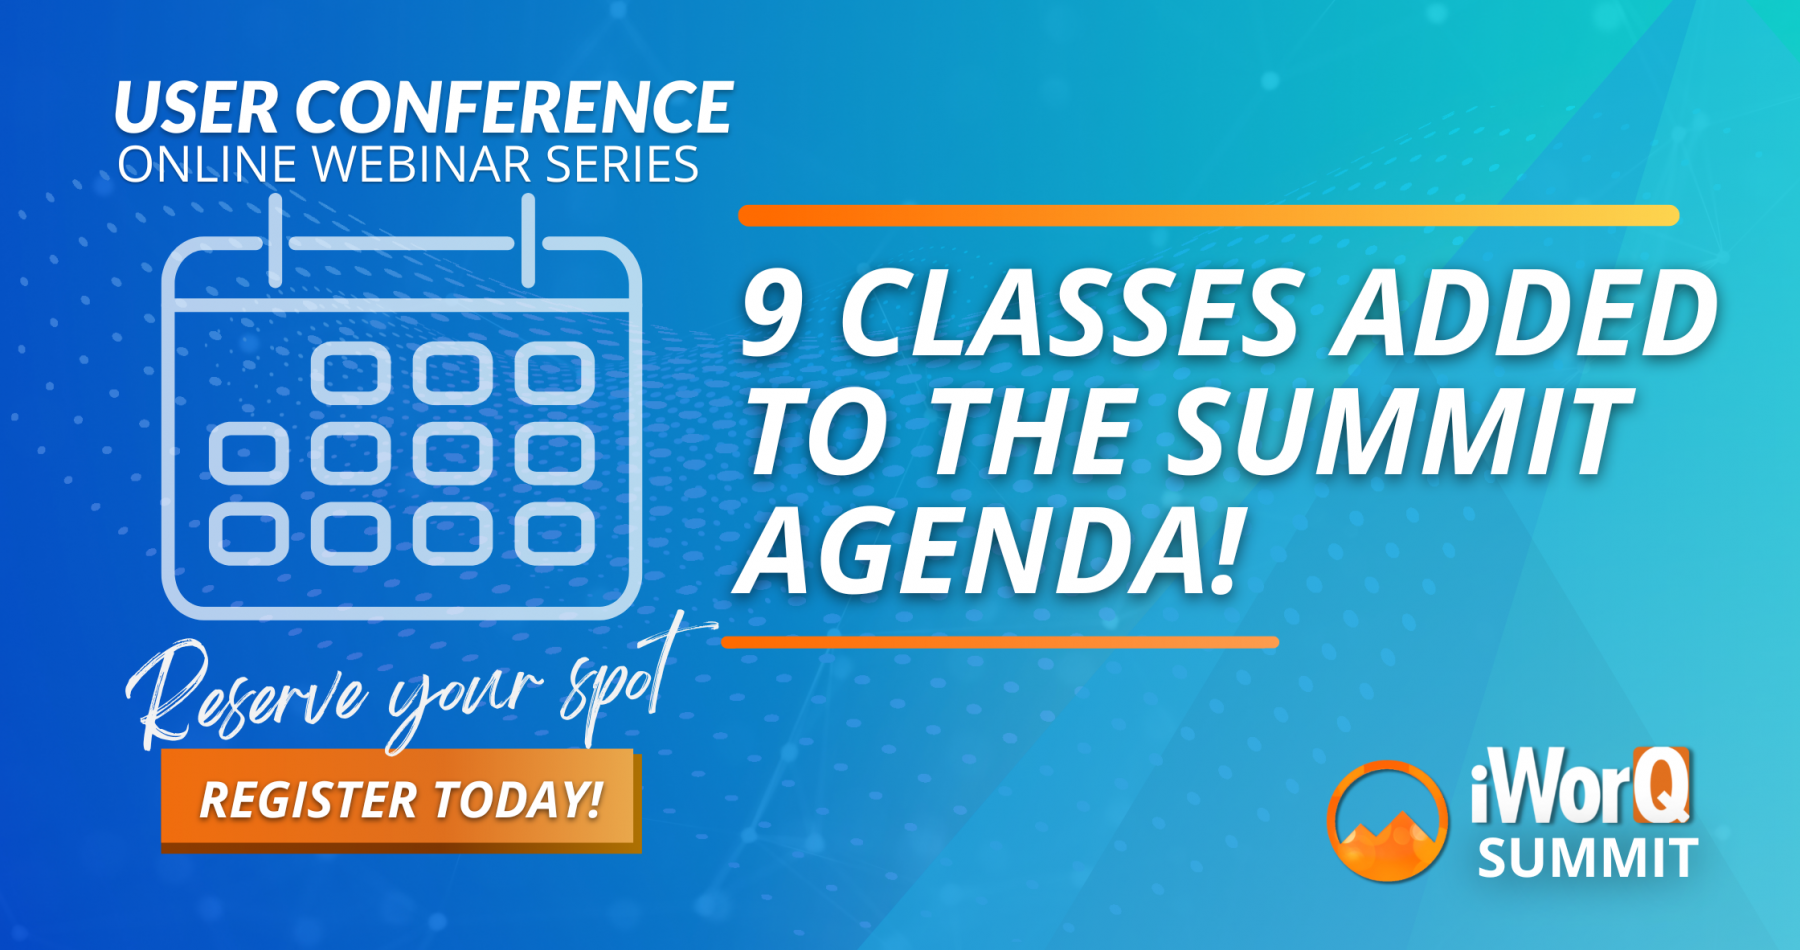 9 New Classes Added to Summit Agenda!